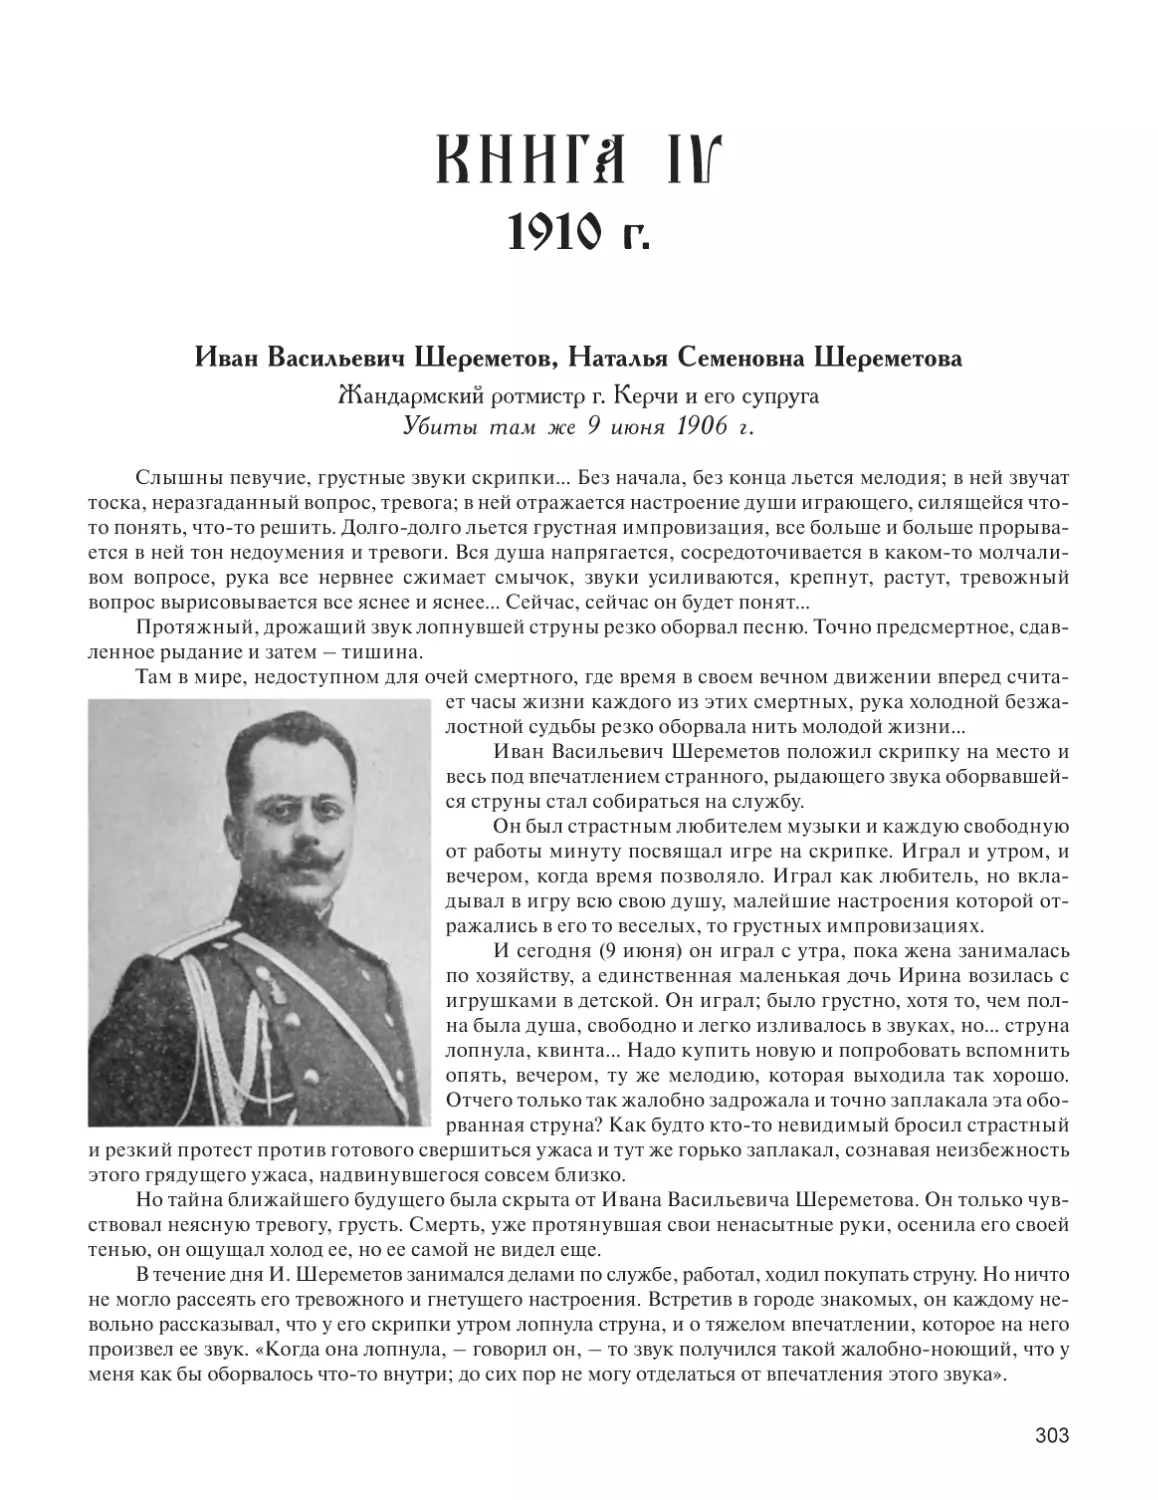 КНИГА IV. 1910 г.